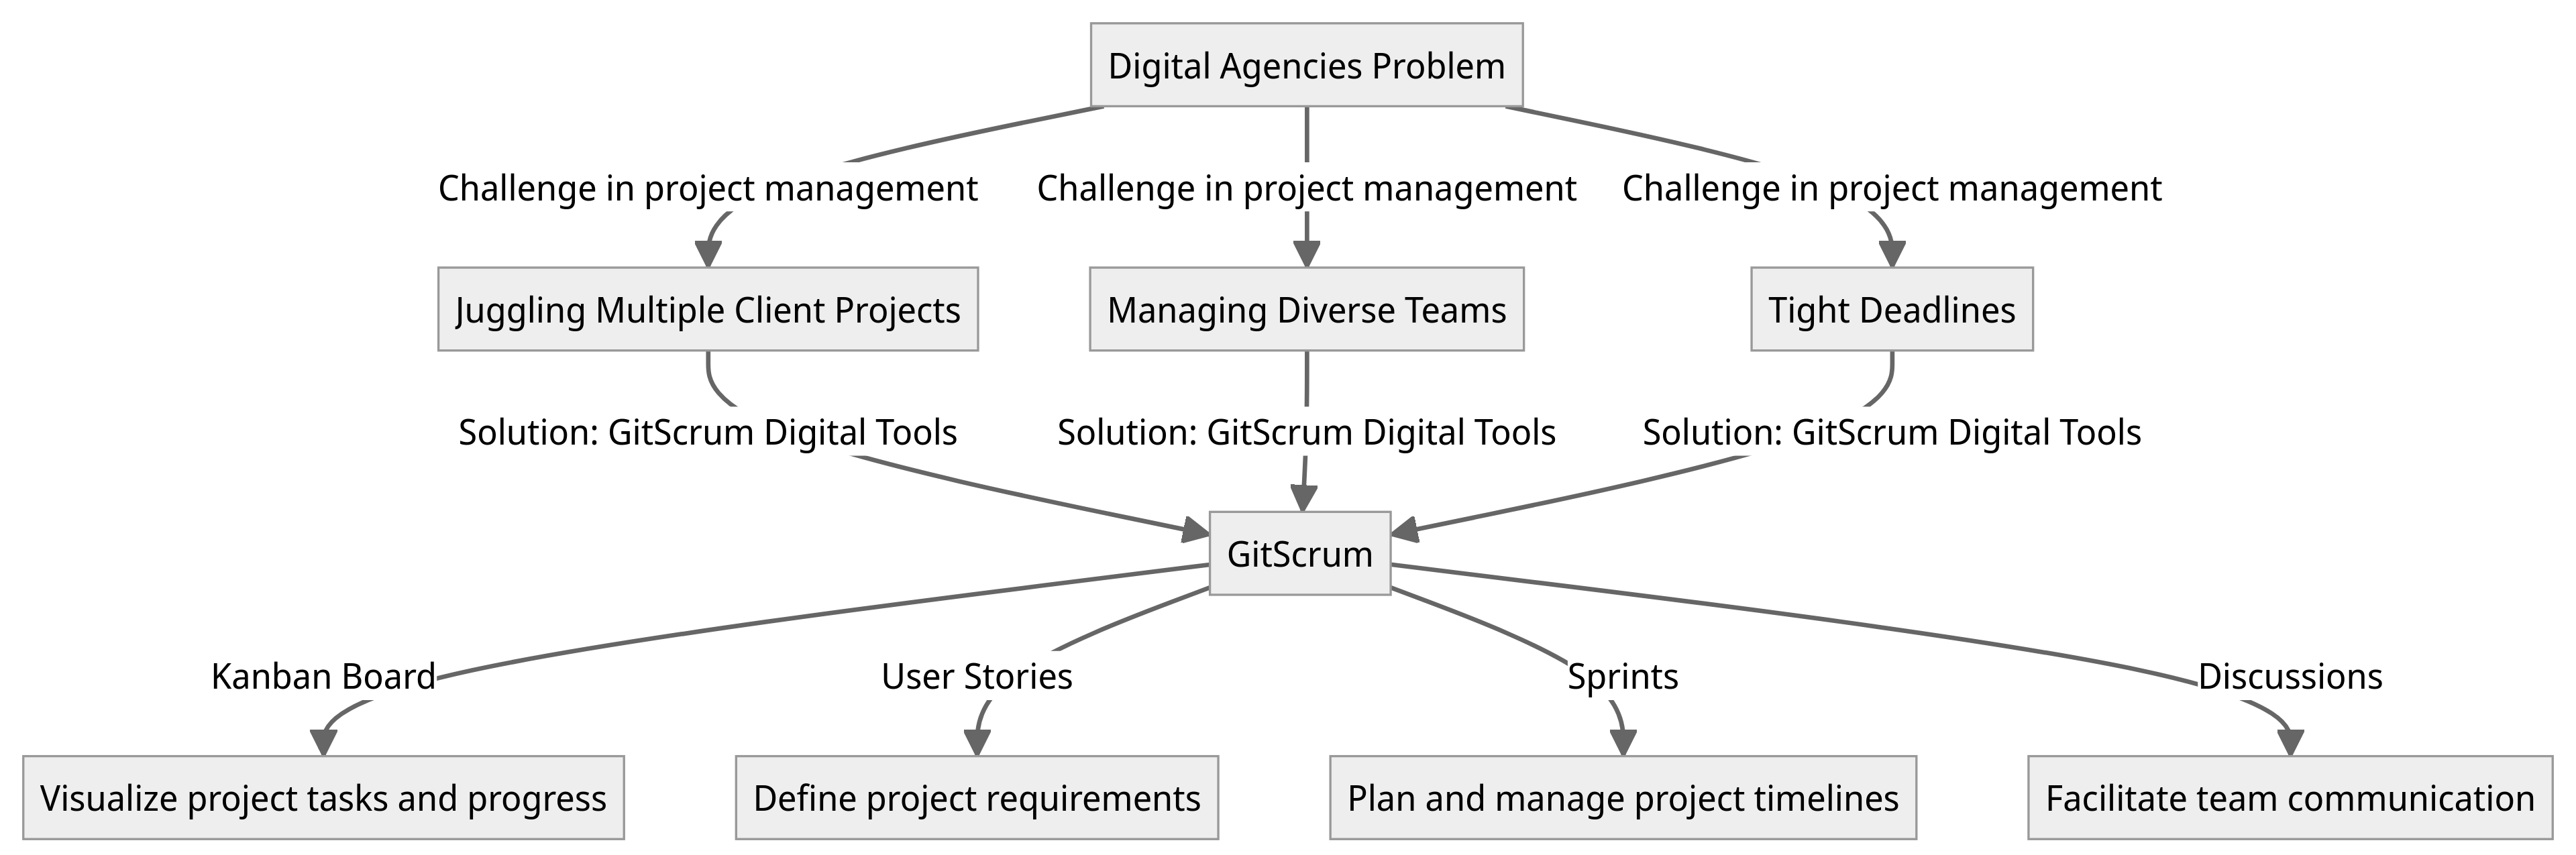 Diagram - Digital Agencies